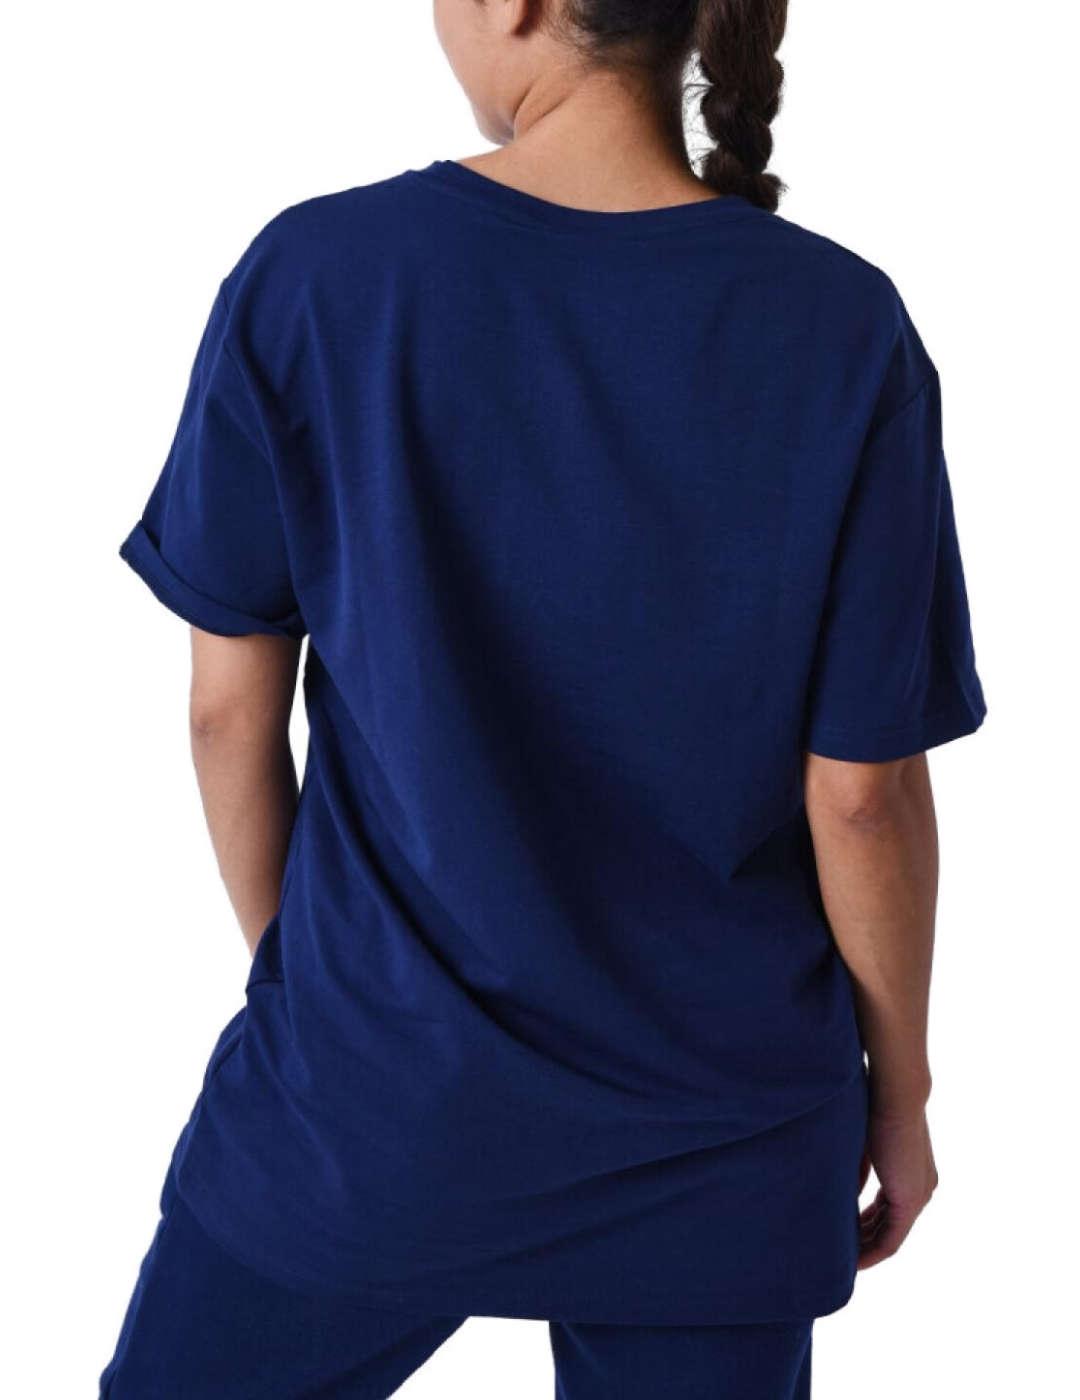 Camiseta ProjectxParis azul marino logo manga corta unisex